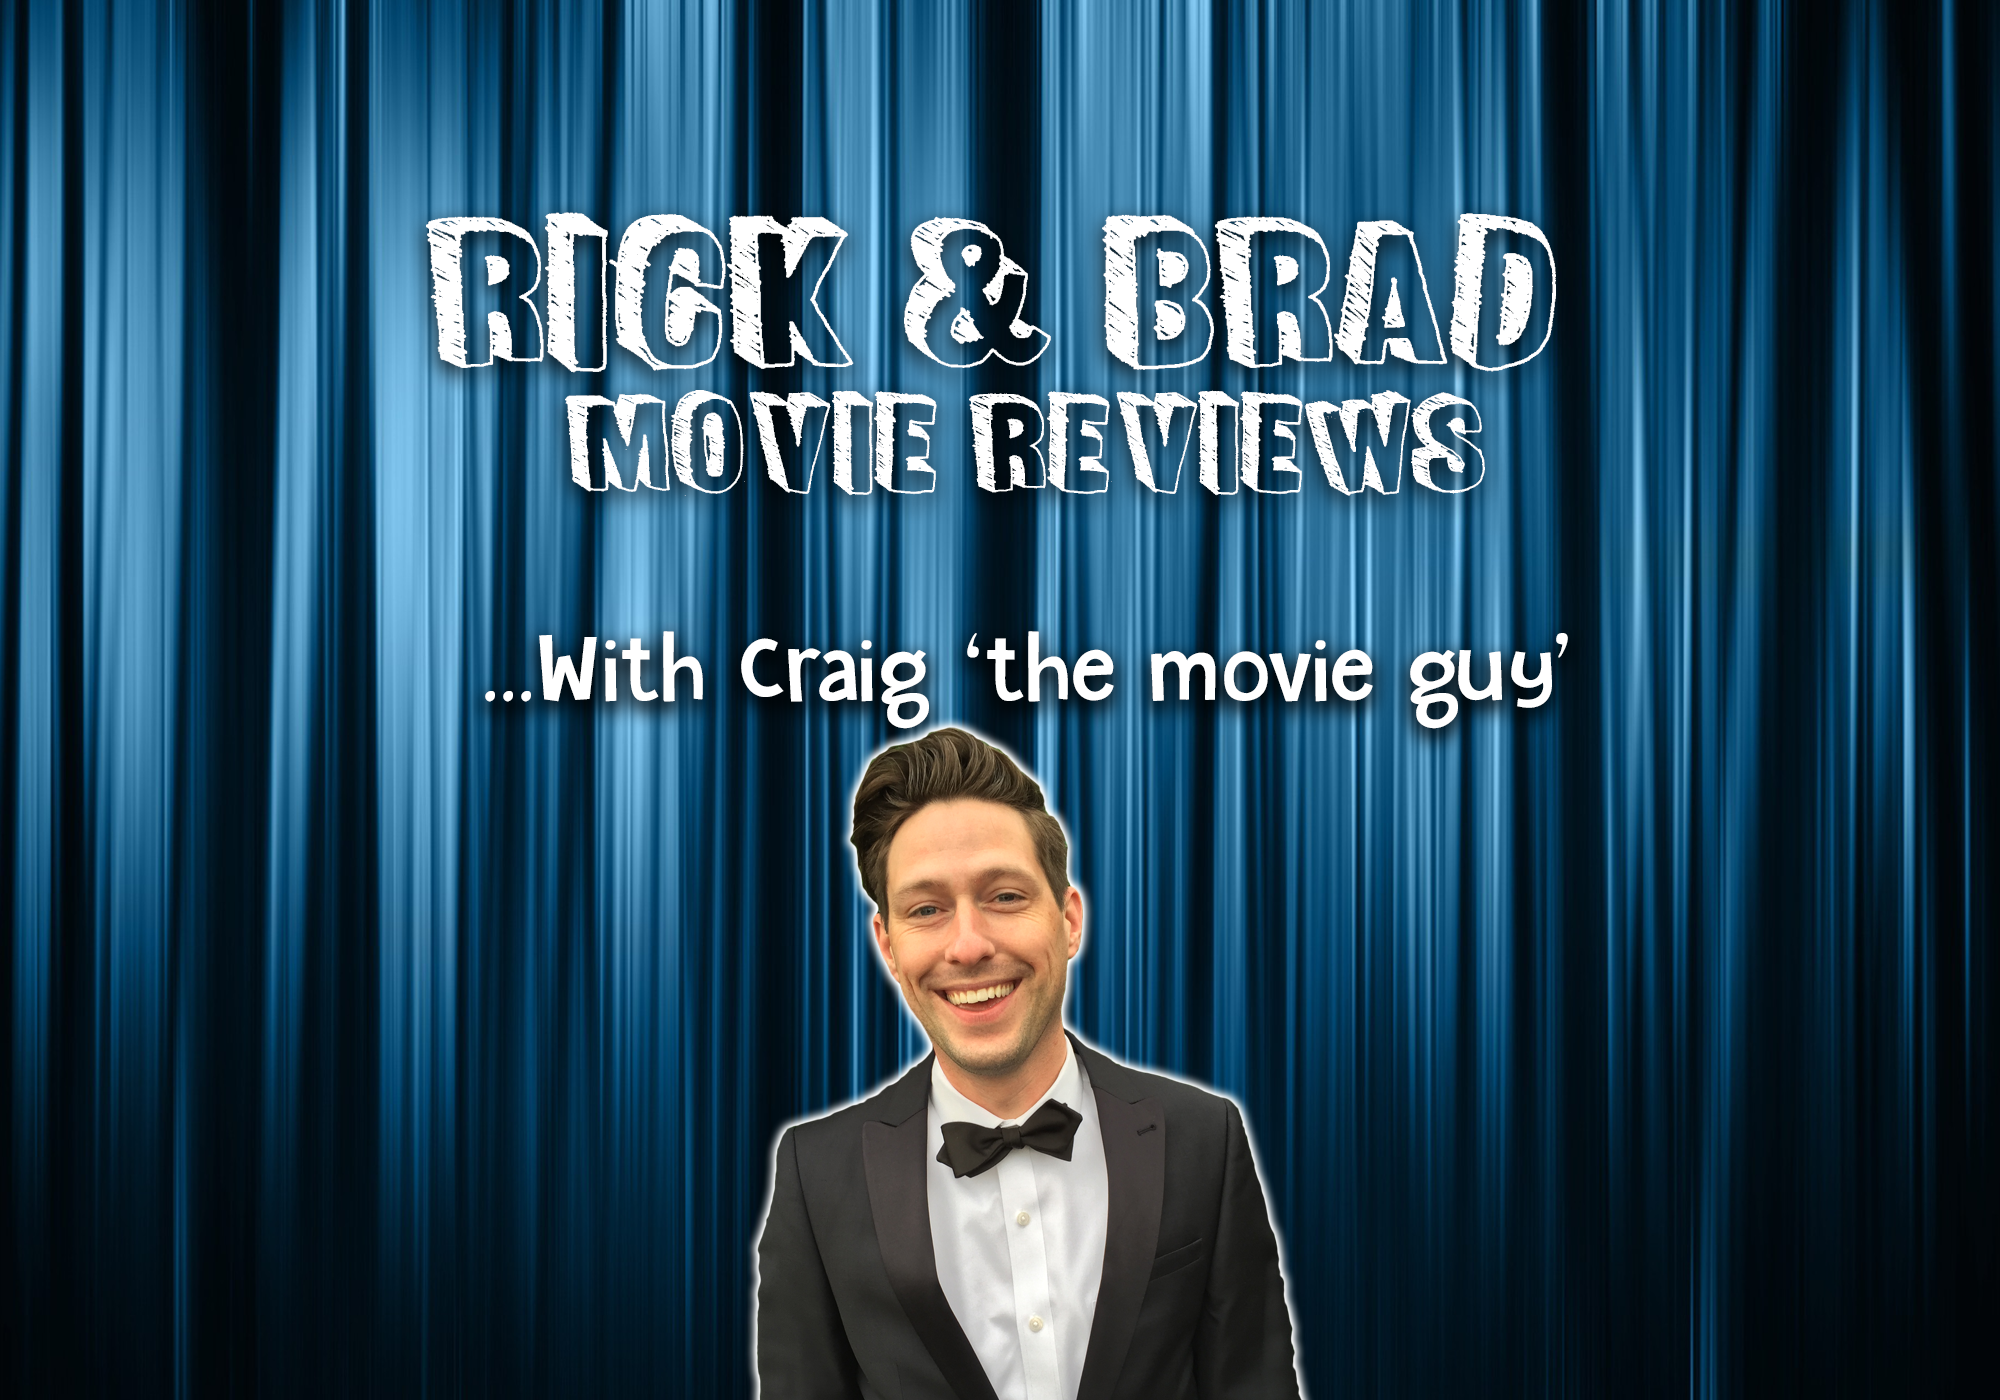 07-30 Movie Reviews with Craig 'The Movie Guy'